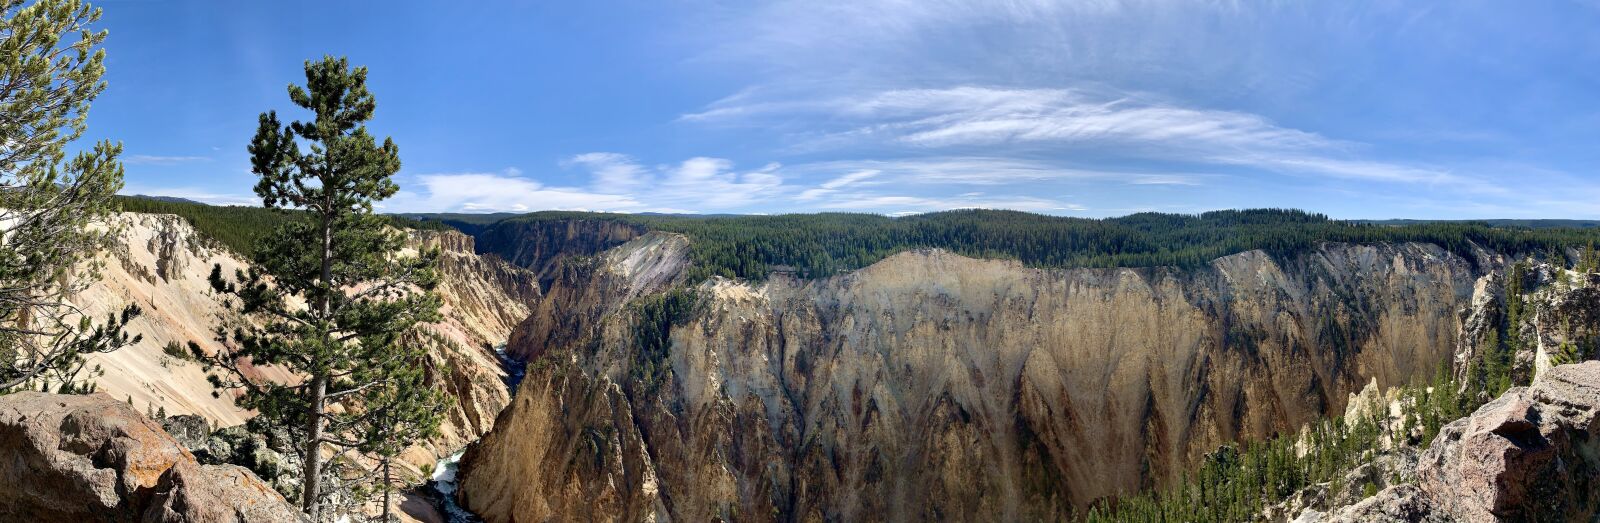 Apple iPhone XS + iPhone XS back camera 4.25mm f/1.8 sample photo. Yellowstone, wyoming, wilderness photography